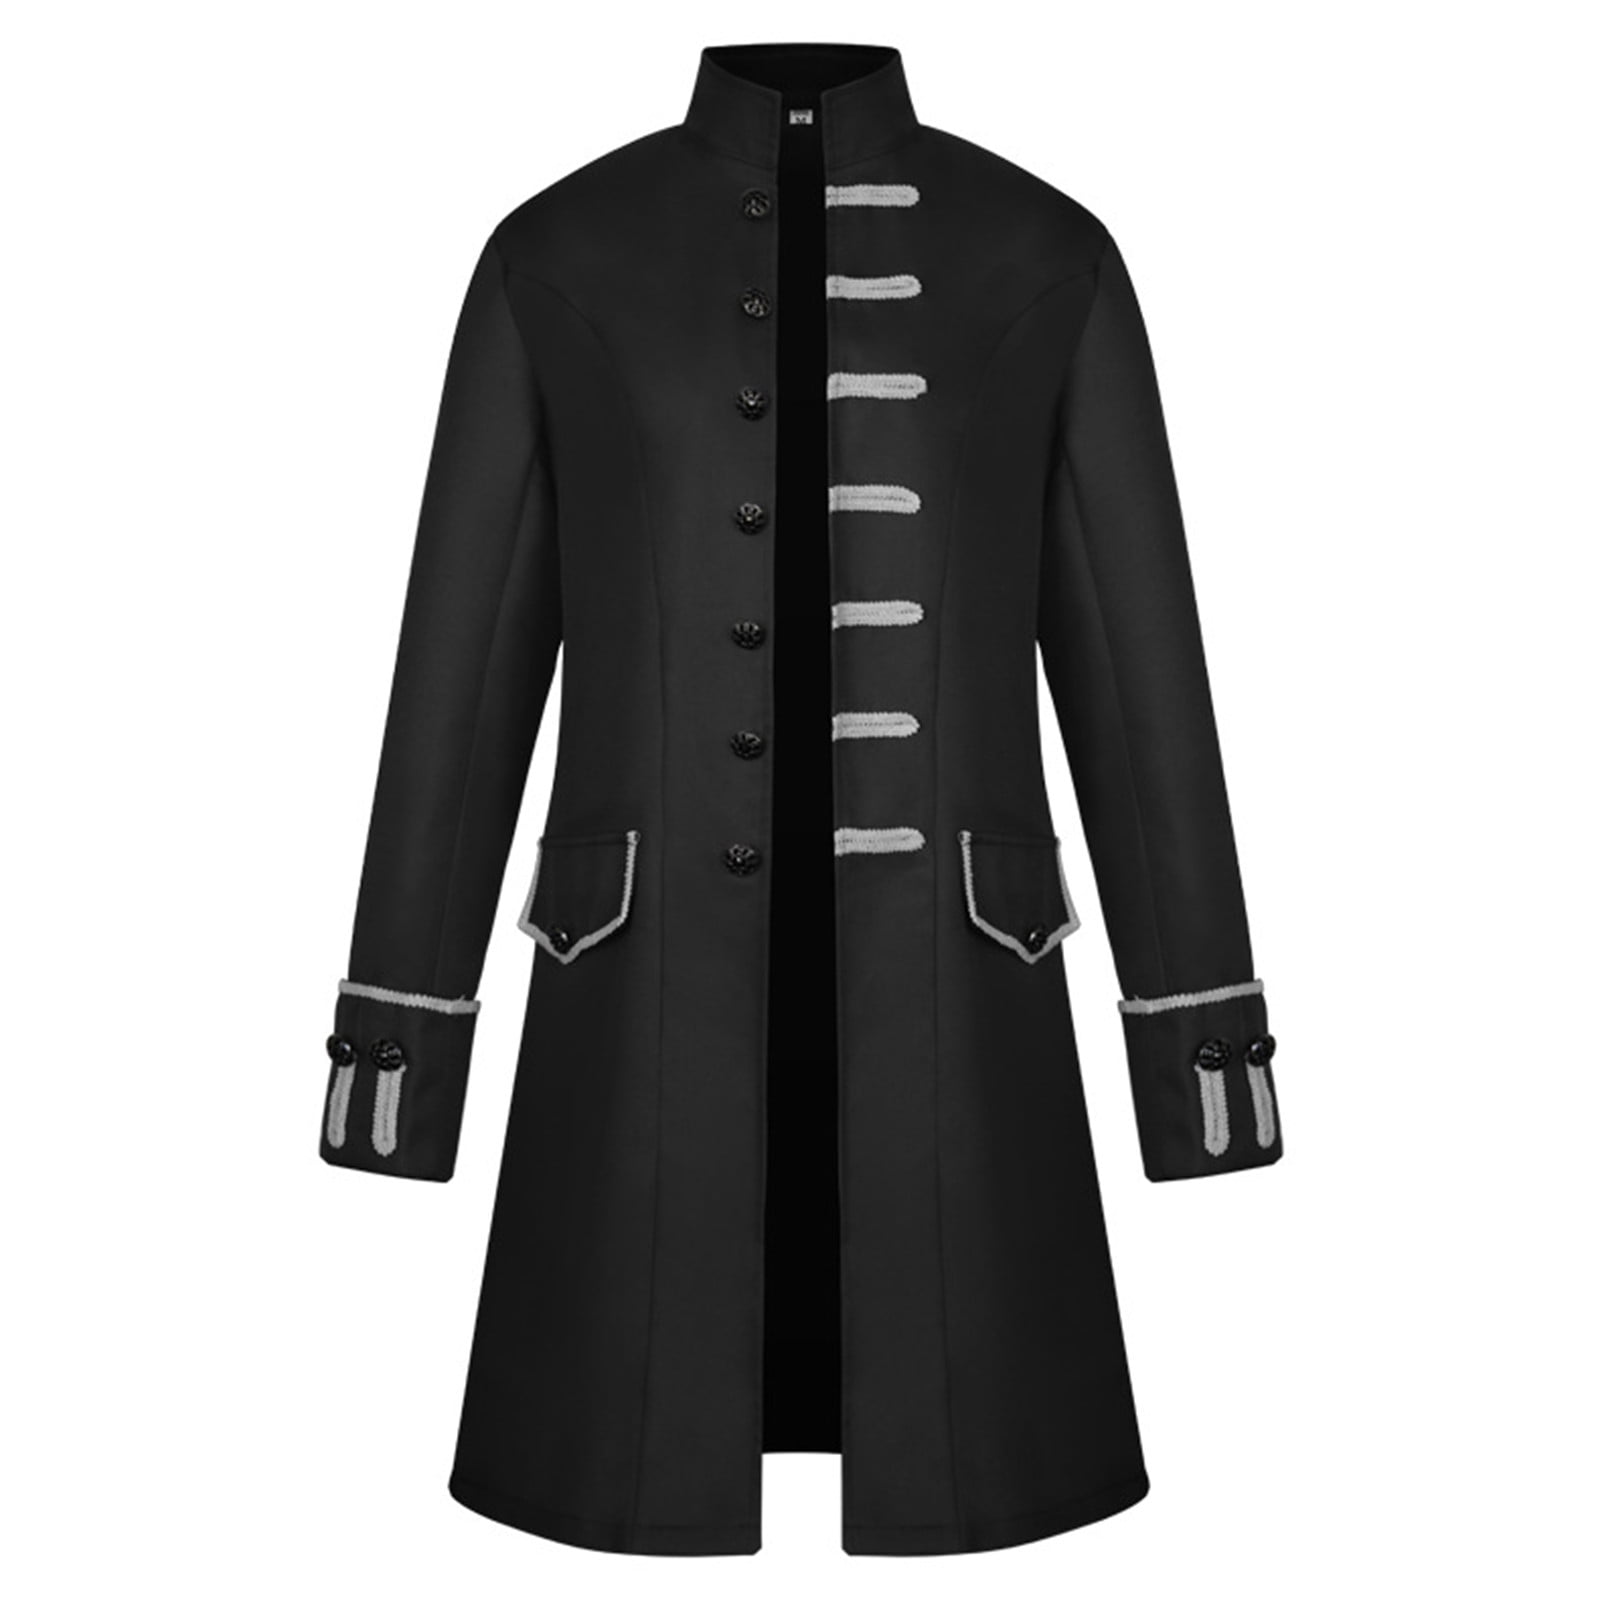 RYRJJ Mens Steampunk Vintage Tailcoat Stand Collar Goth Jacket Formal ...